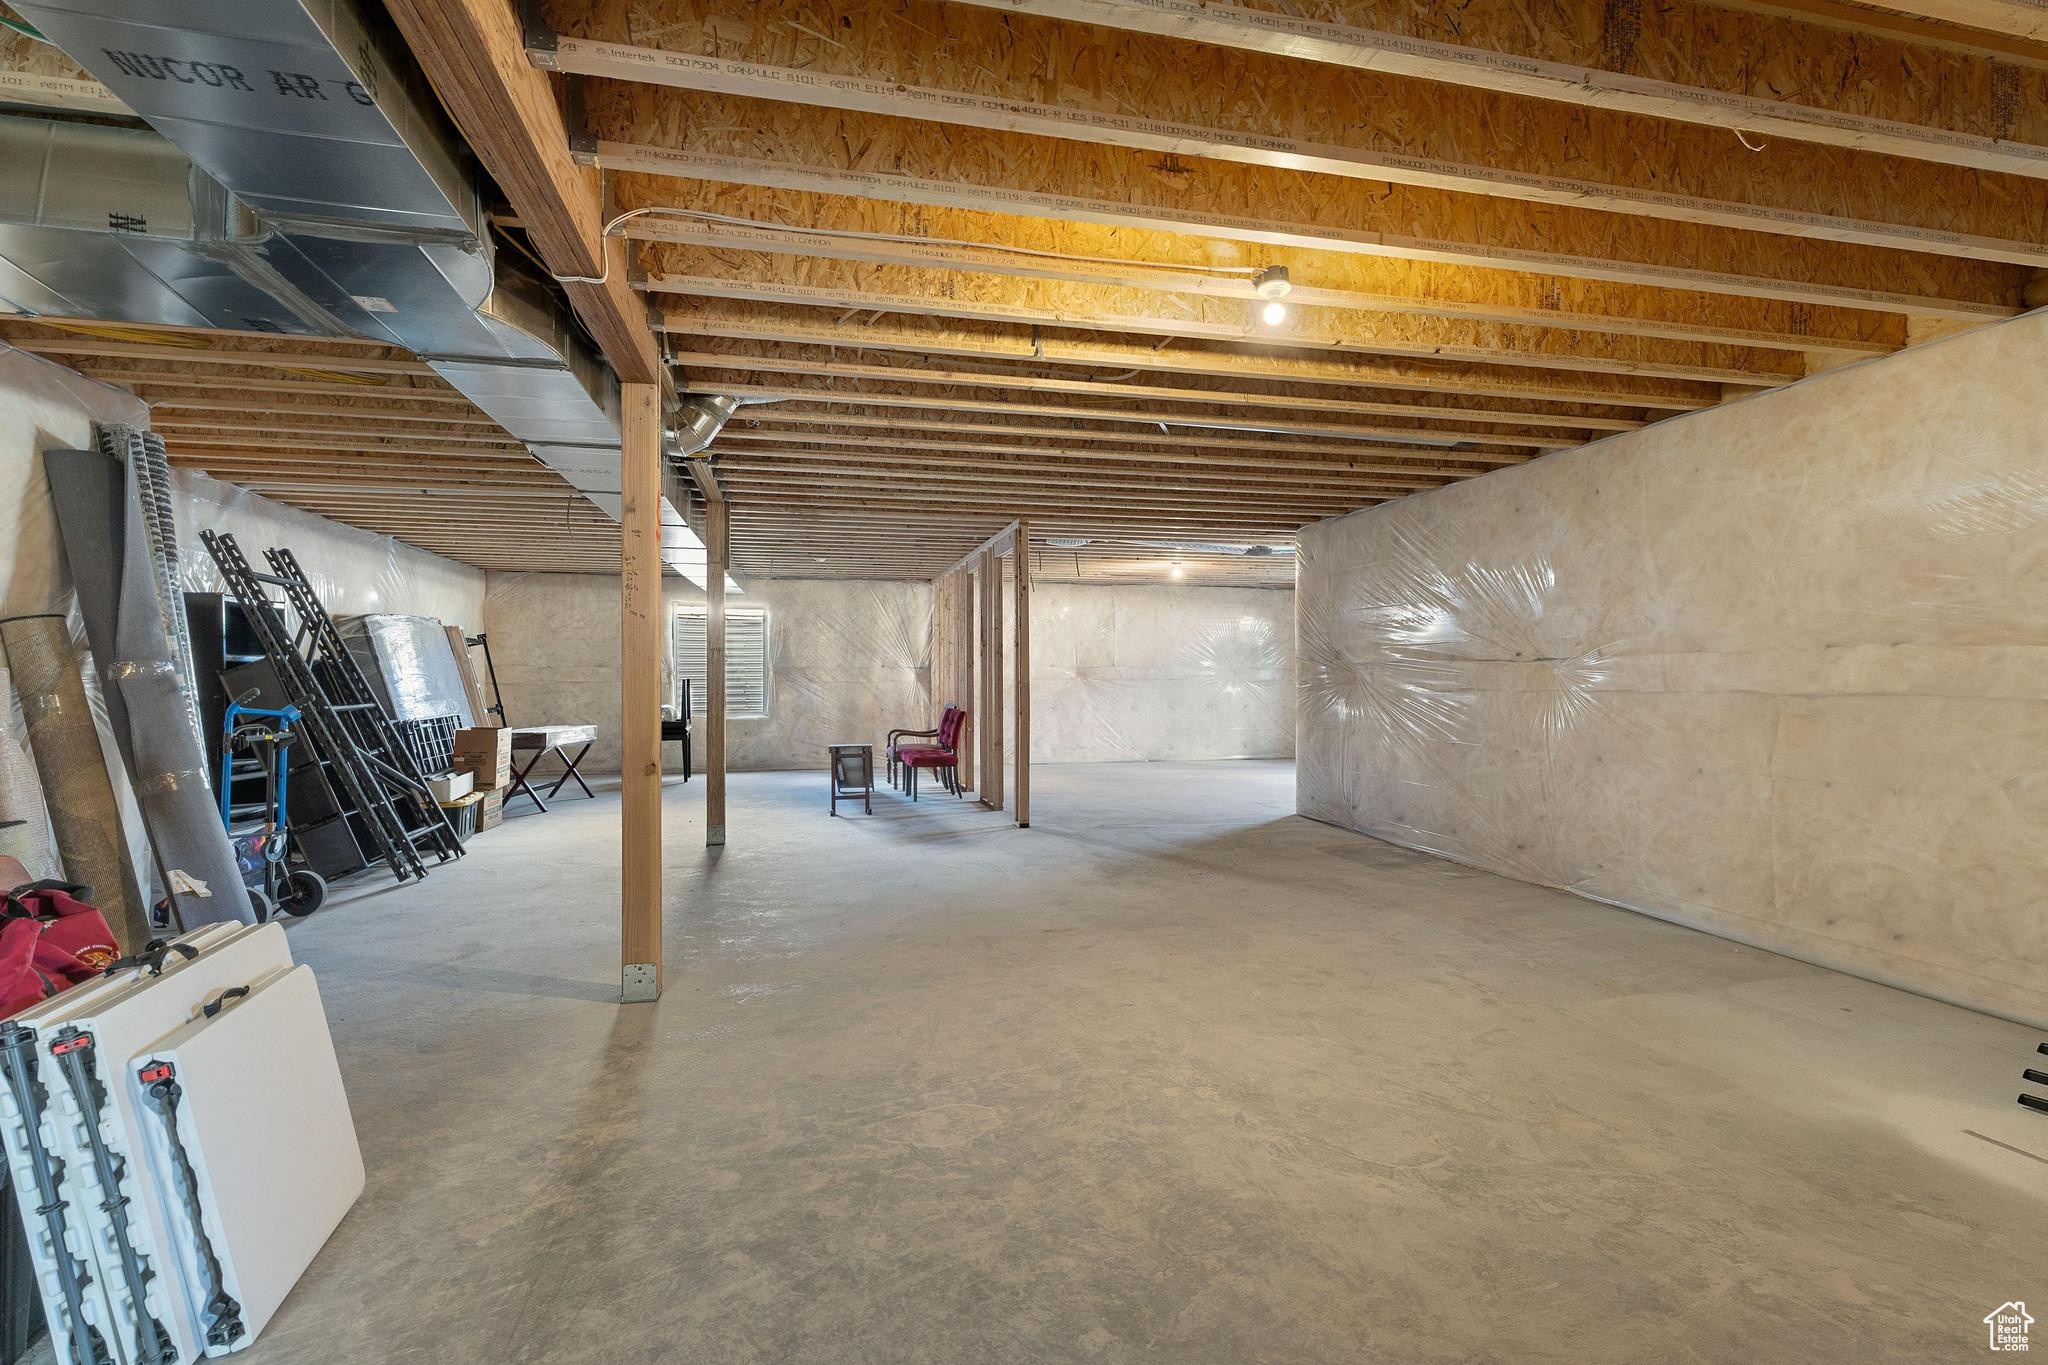 Full unfinished basement